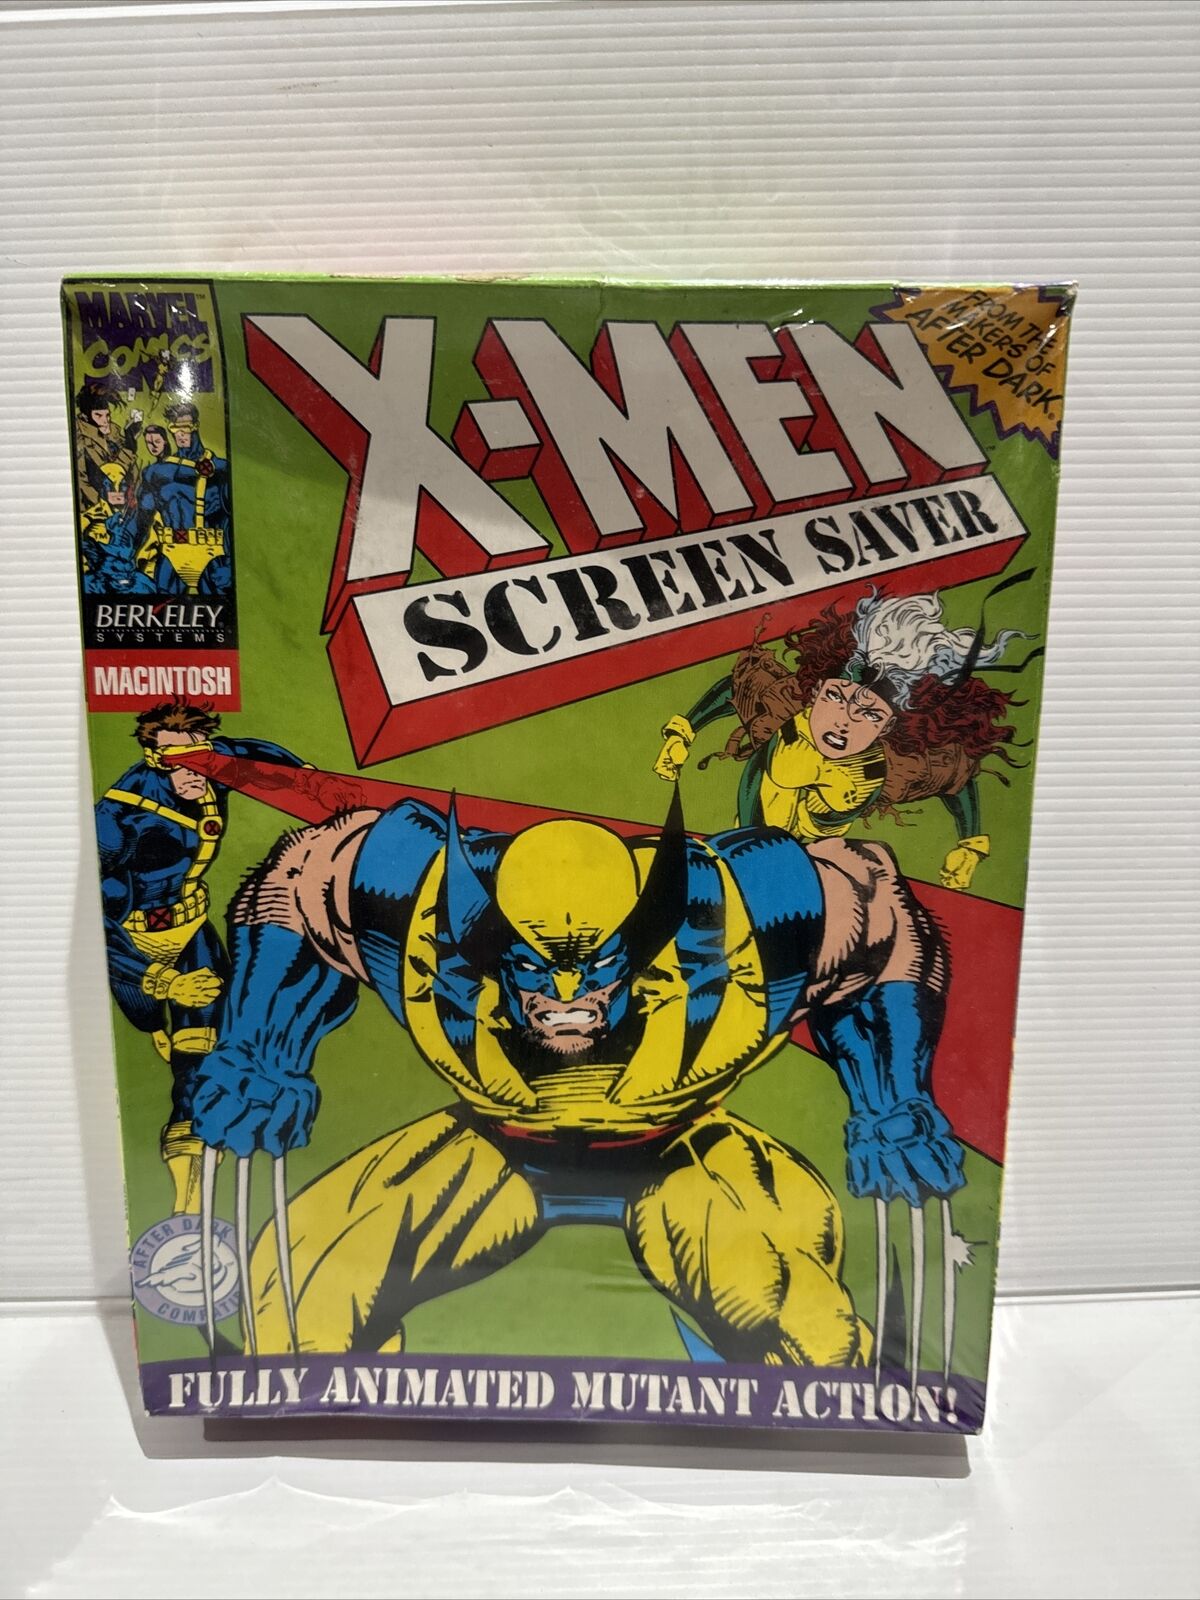 X-Men Marvel Screen Saver For Macintosh By Berkeley Systems After Dark 3.5 Disks